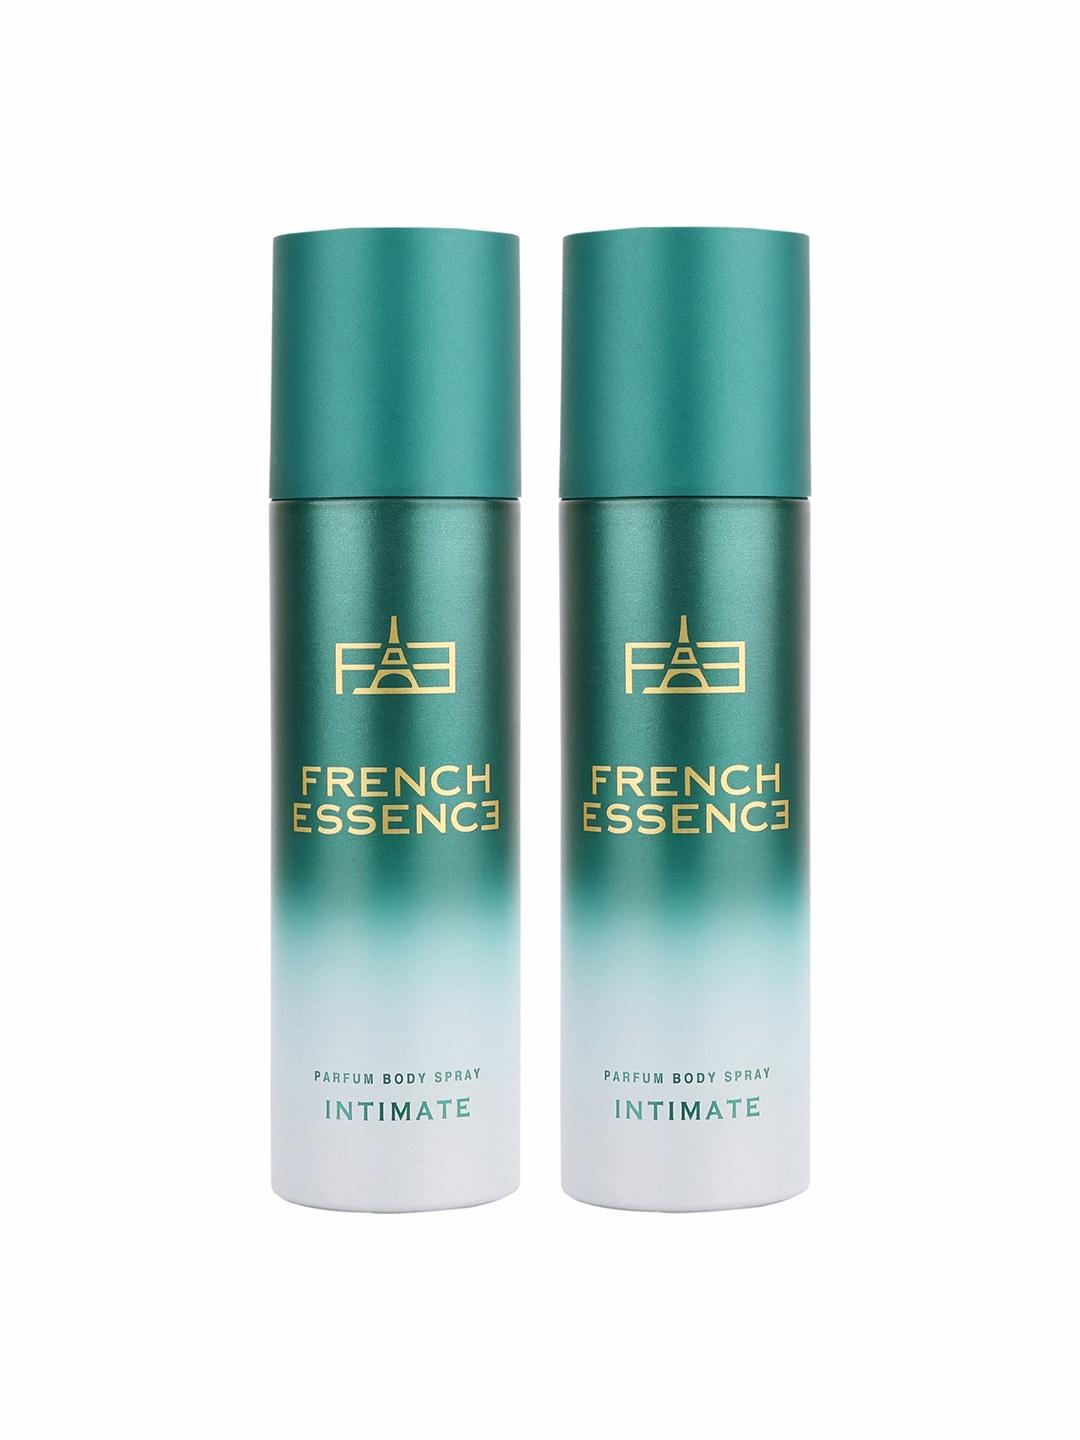 FRENCH ESSENCE Set of 2 No Gas Parfum Body Spray 99 g (120ml) Each - Intimate